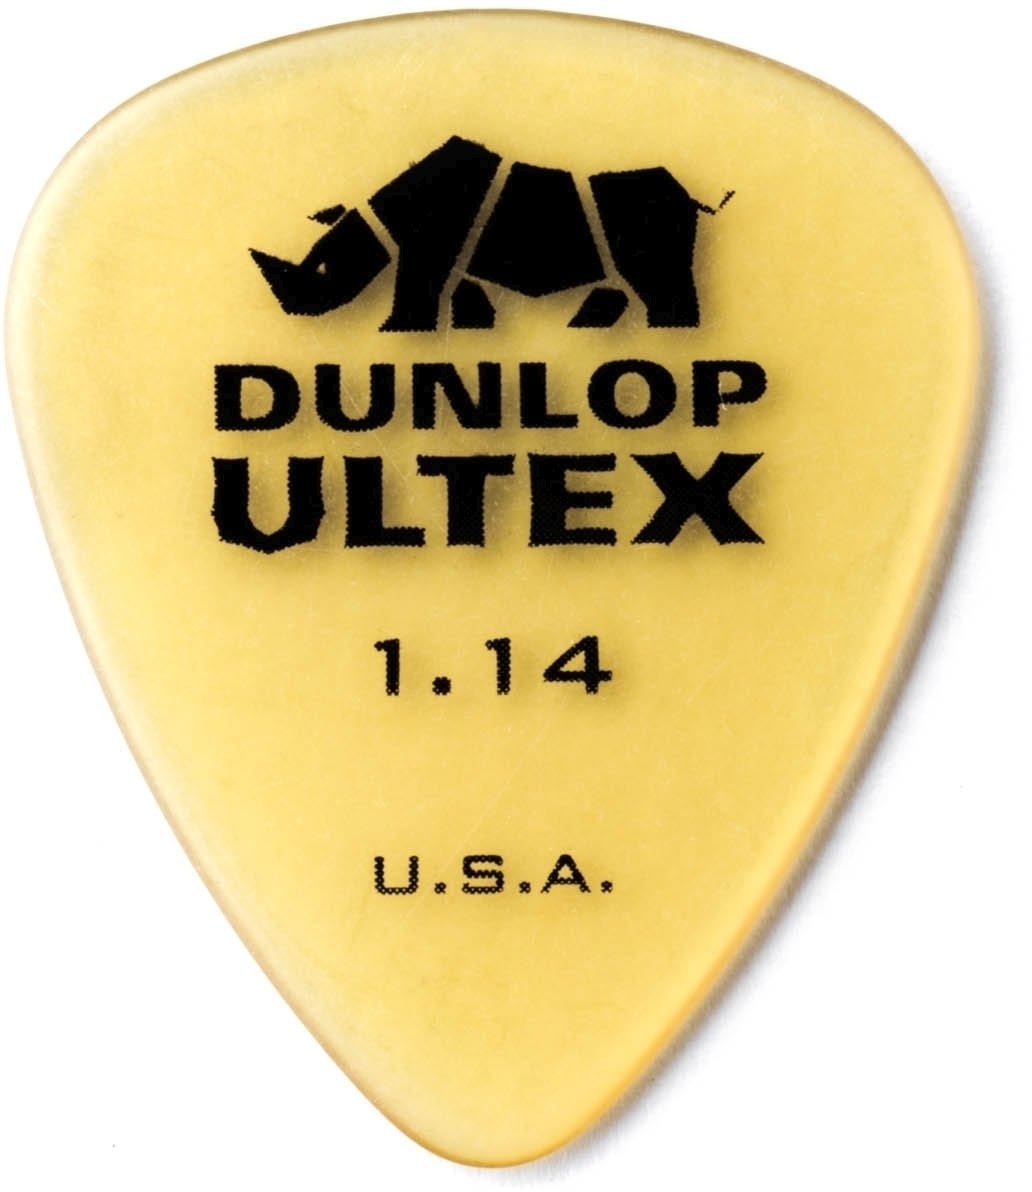 Pick Dunlop 421R 1.14 Ultex Pick